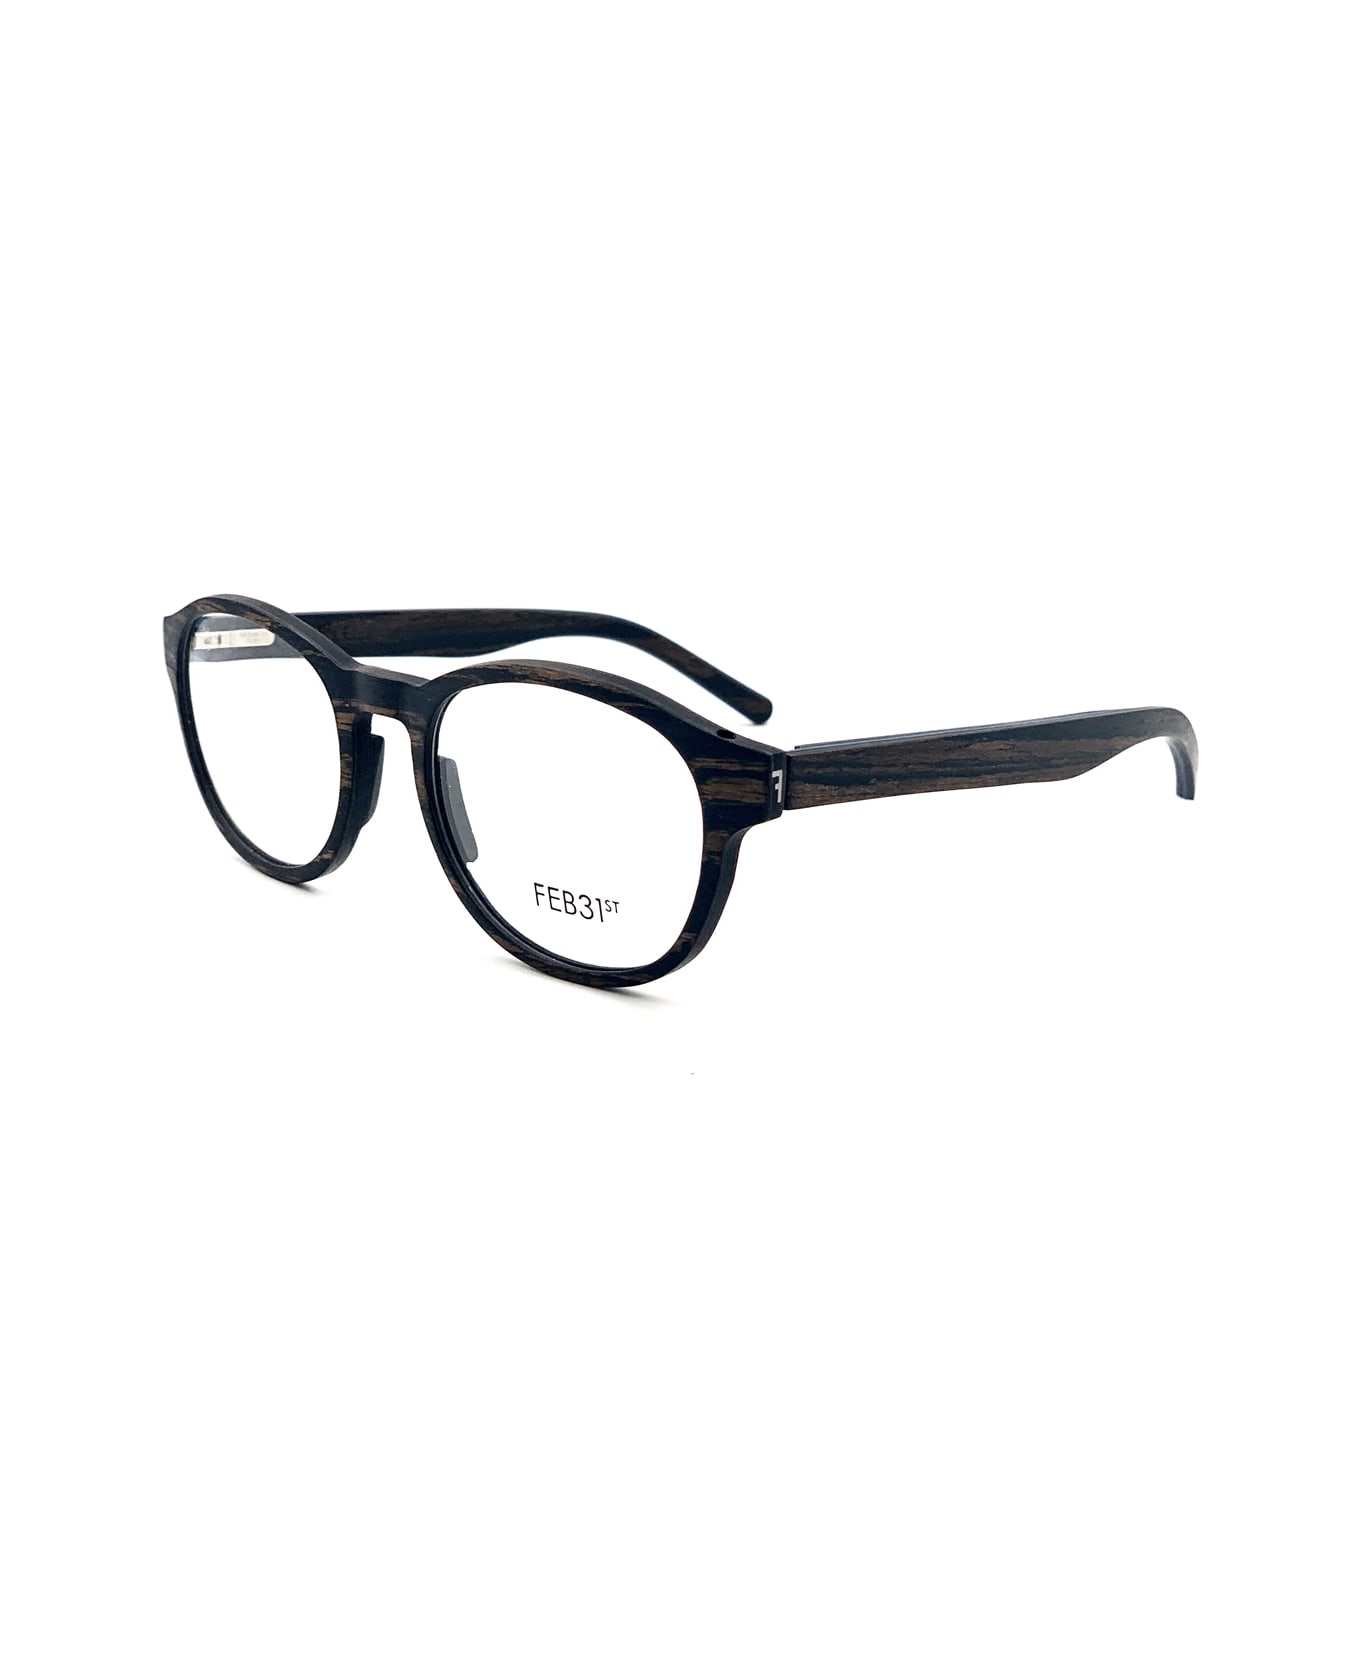 Feb31st Truman Glasses - Marrone